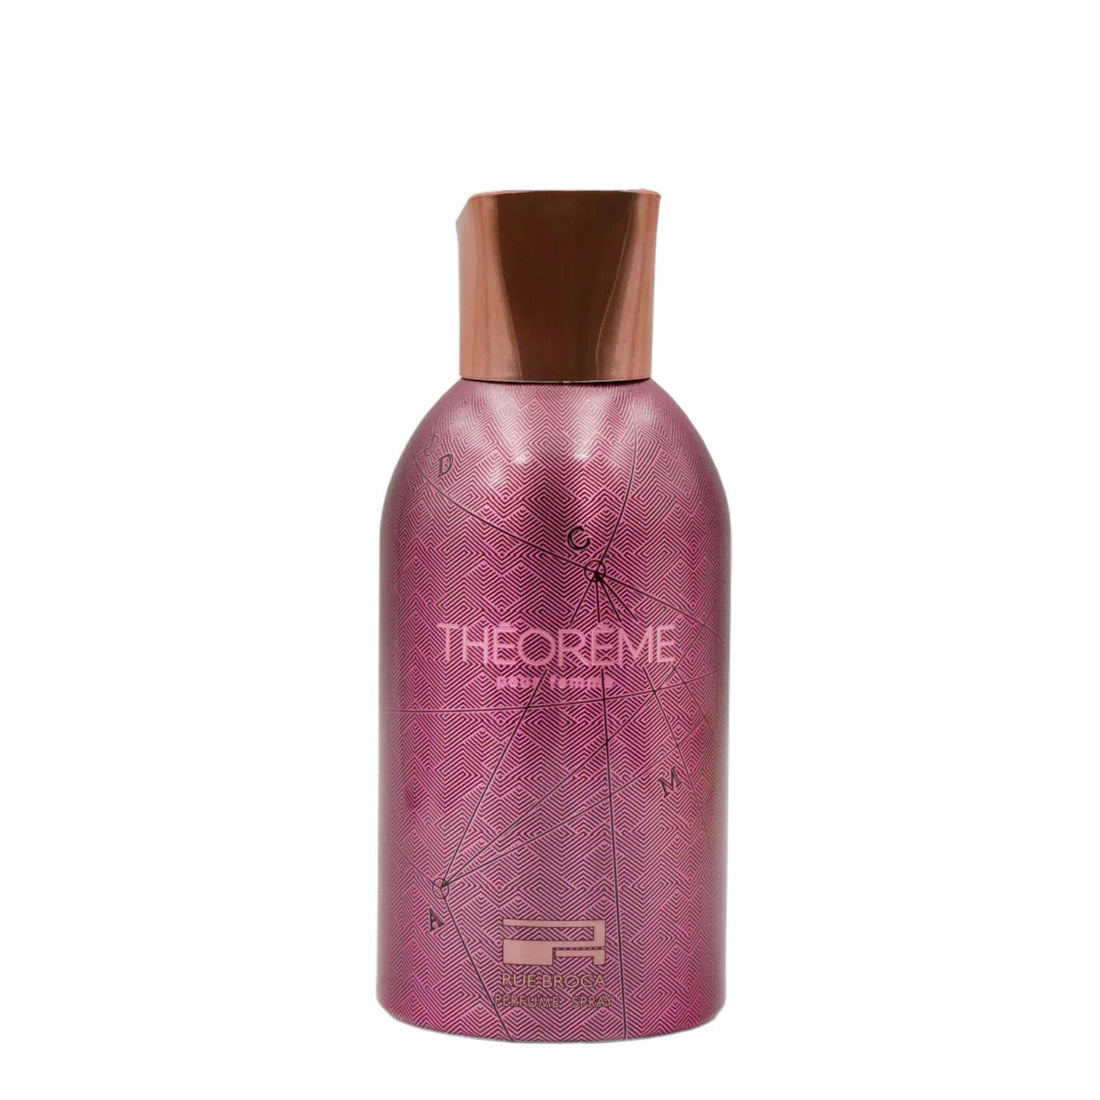 Elegant 250ml bottle of Rue Broca Theoremme Pink Deodorant, showcasing its stylish design and soft pink hue.